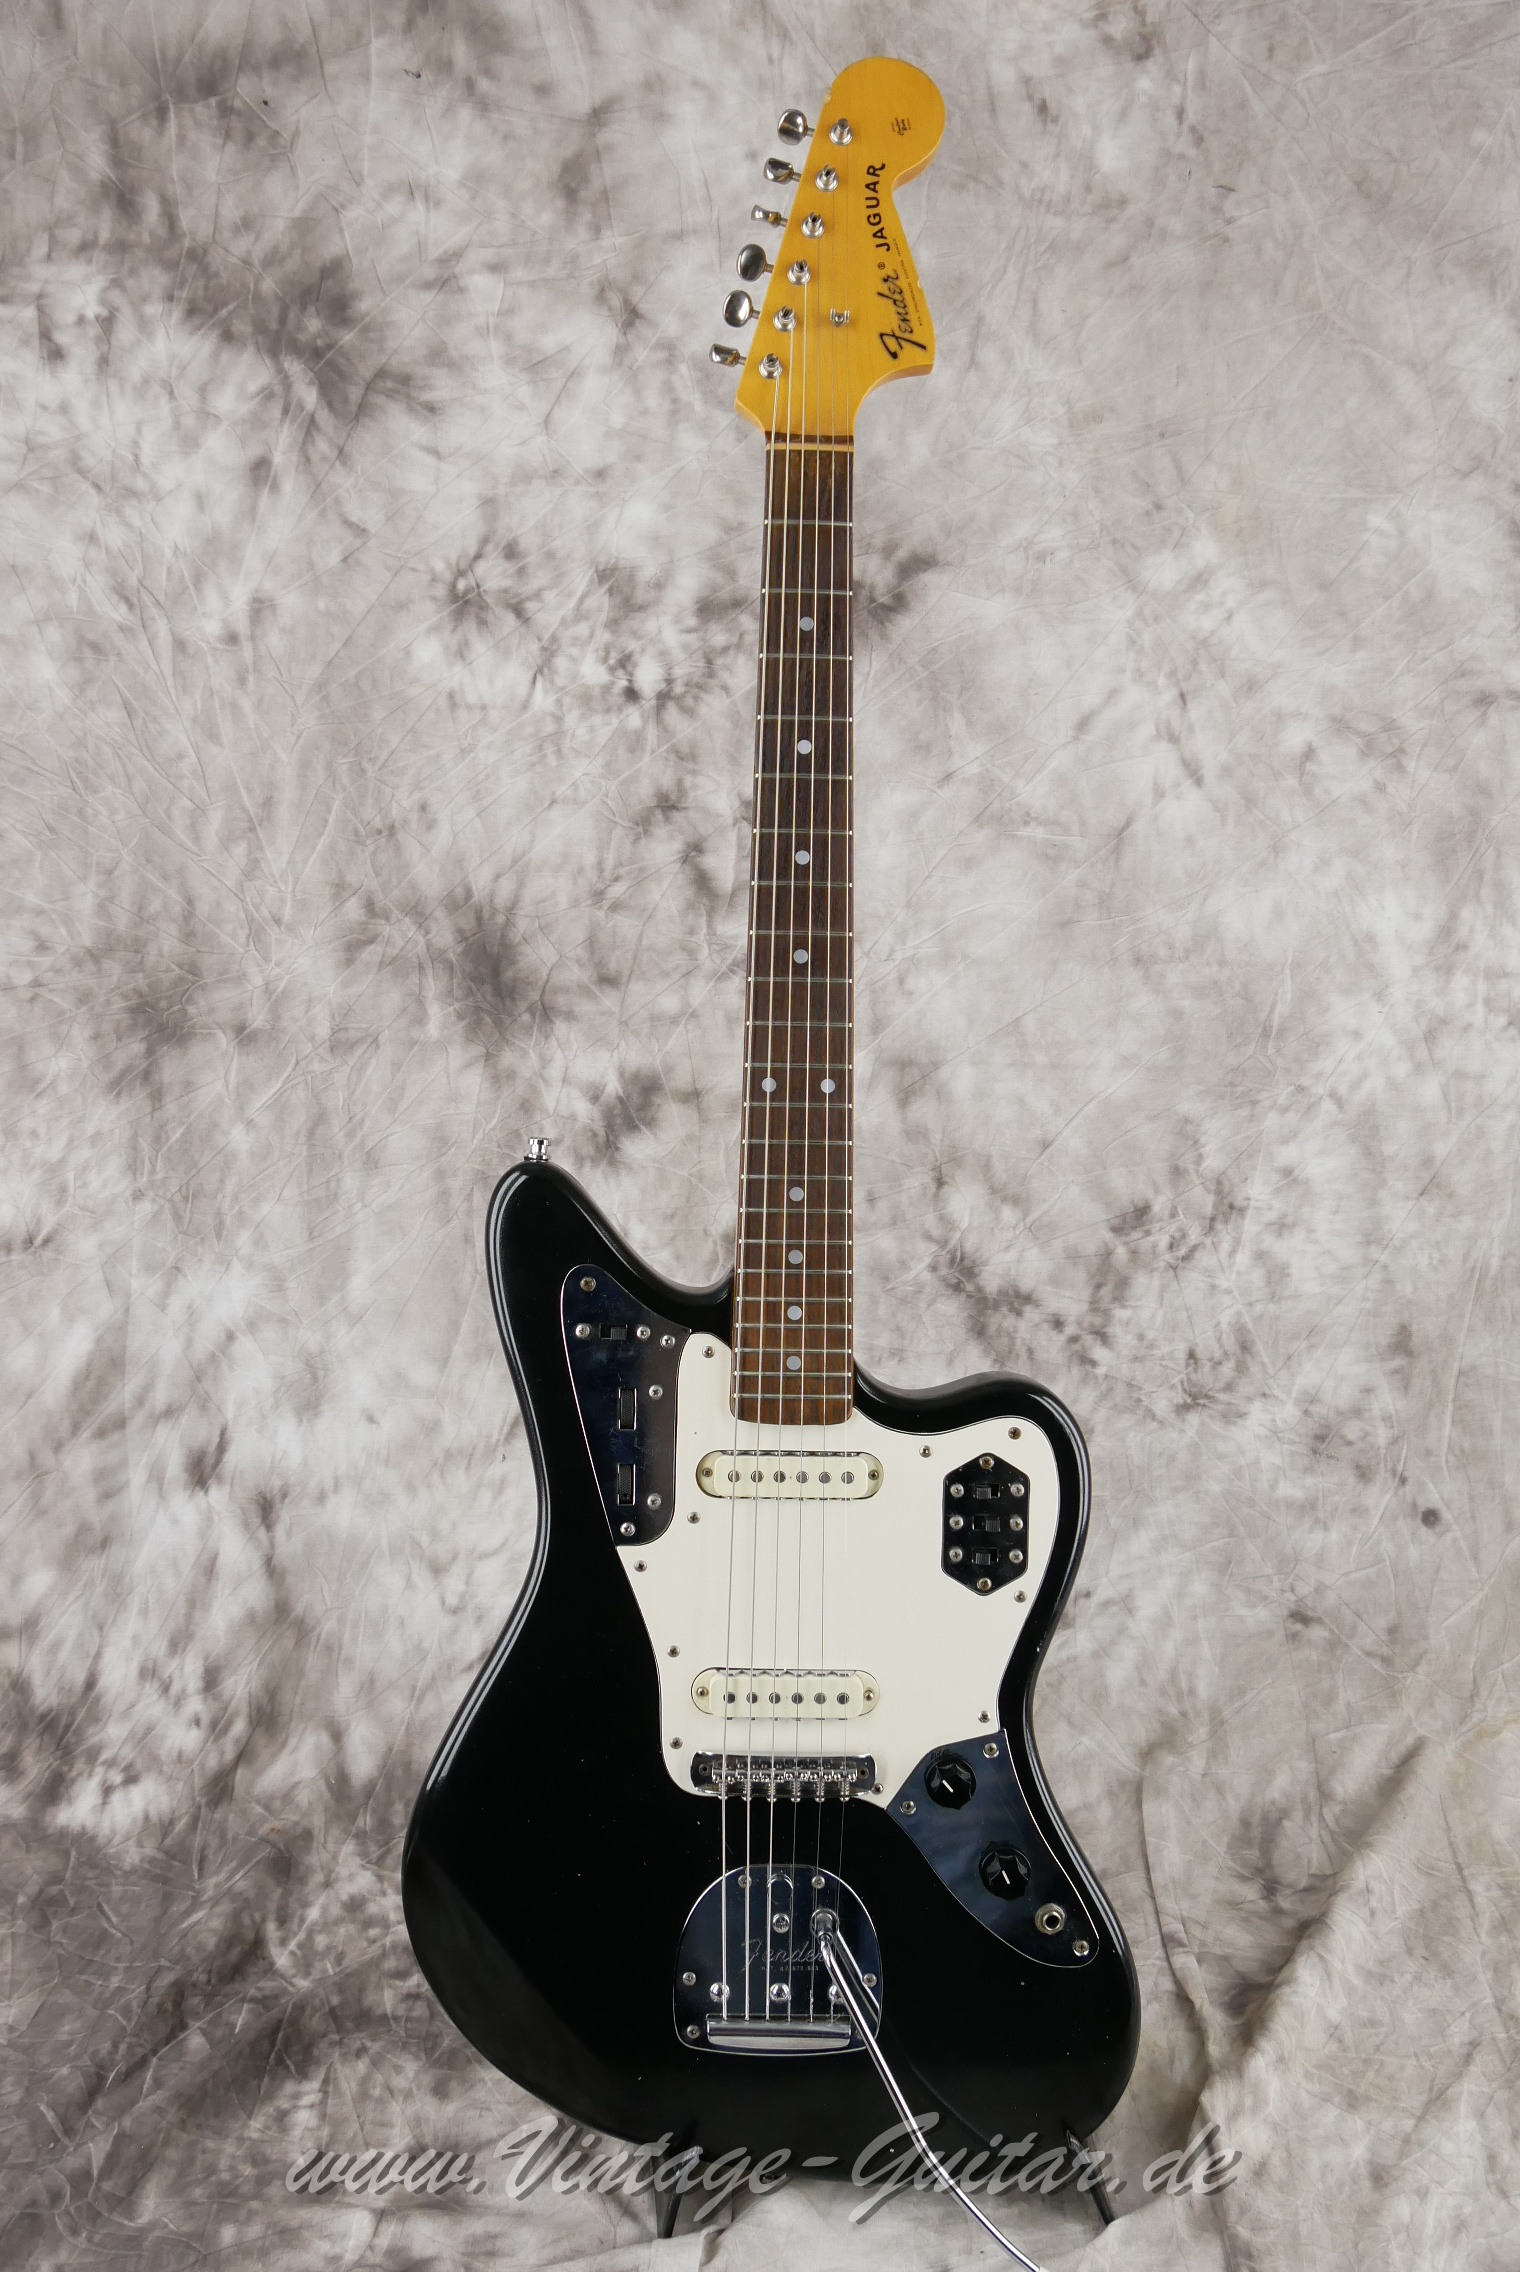 Fender_Jaguar_62RI_Japan_black_1996-001.JPG